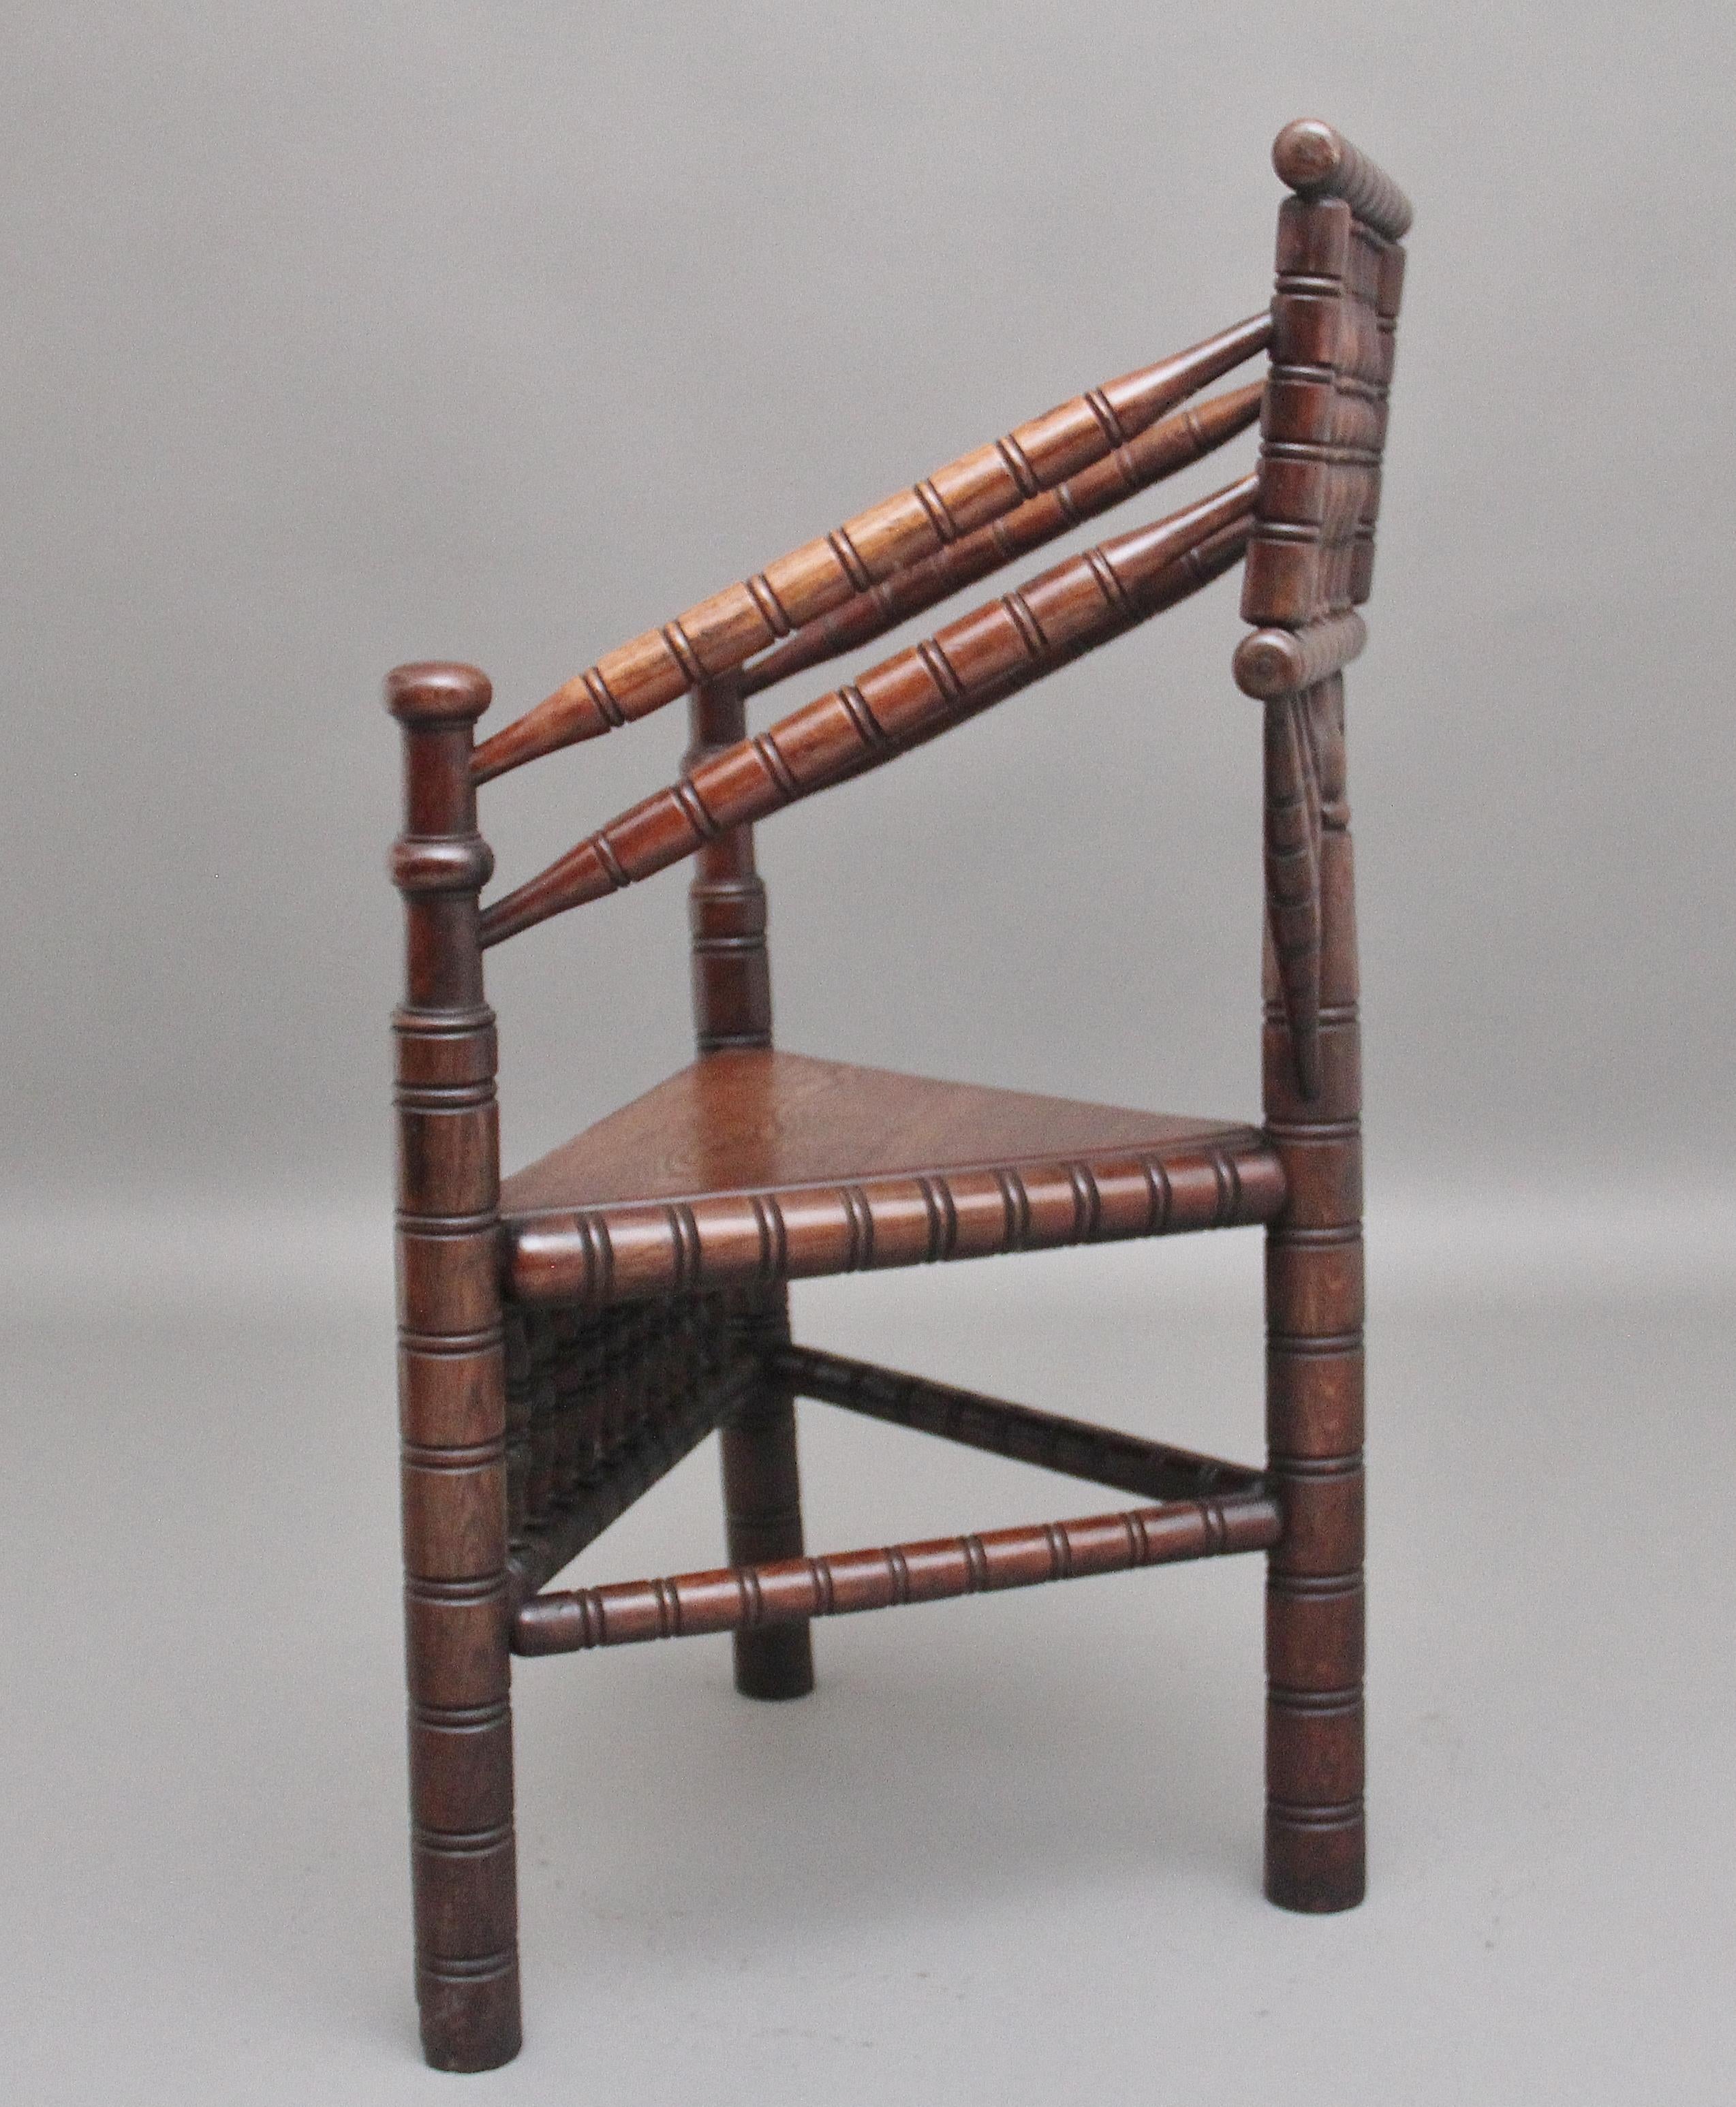 Milieu du XIXe siècle Chaise tournante en chêne du 19e siècle en vente